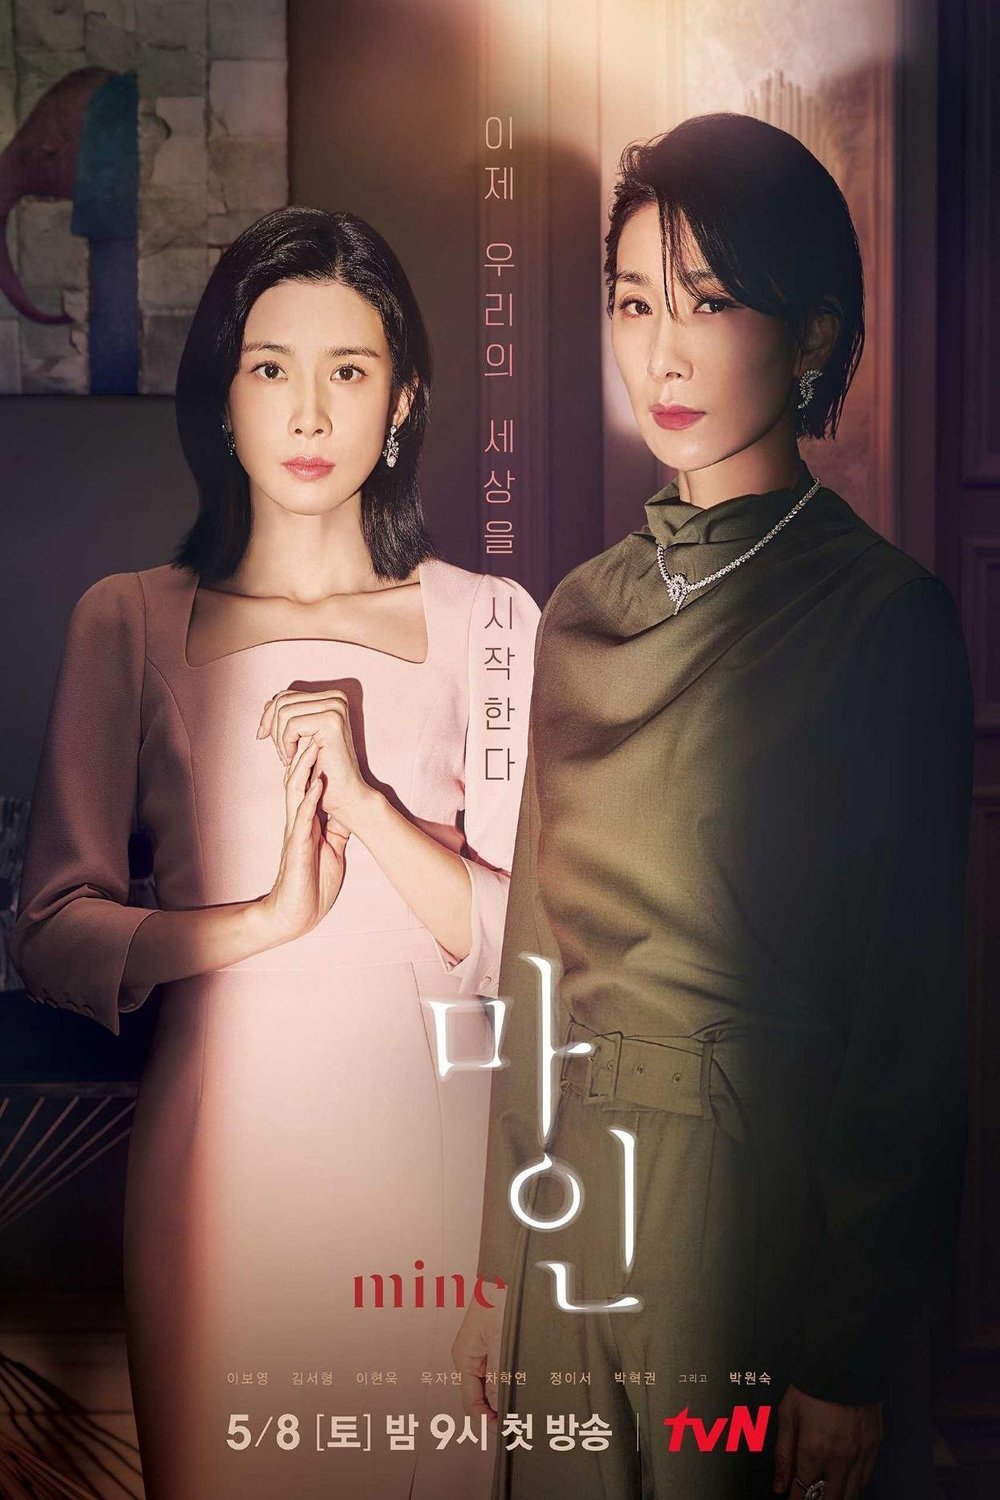 Korean poster of the movie Mine